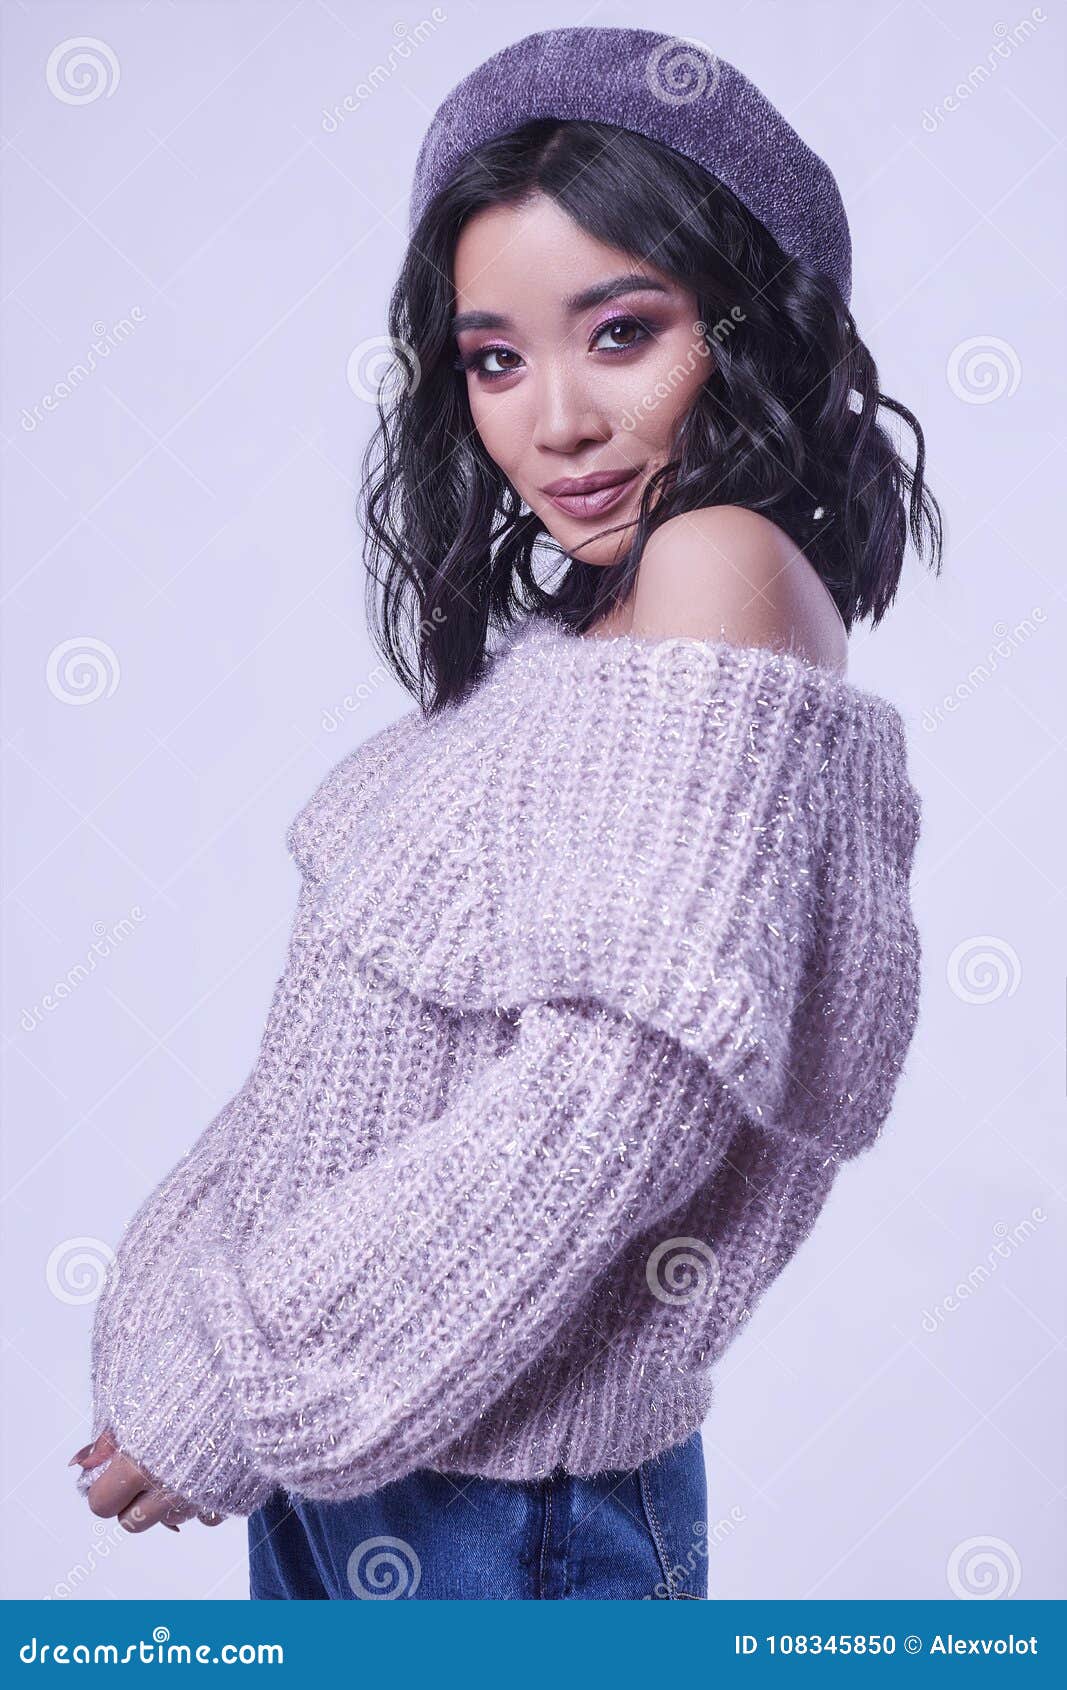 beautiful charming asian girl purple sweater bright background glamorous fashion portrait studio 108345850